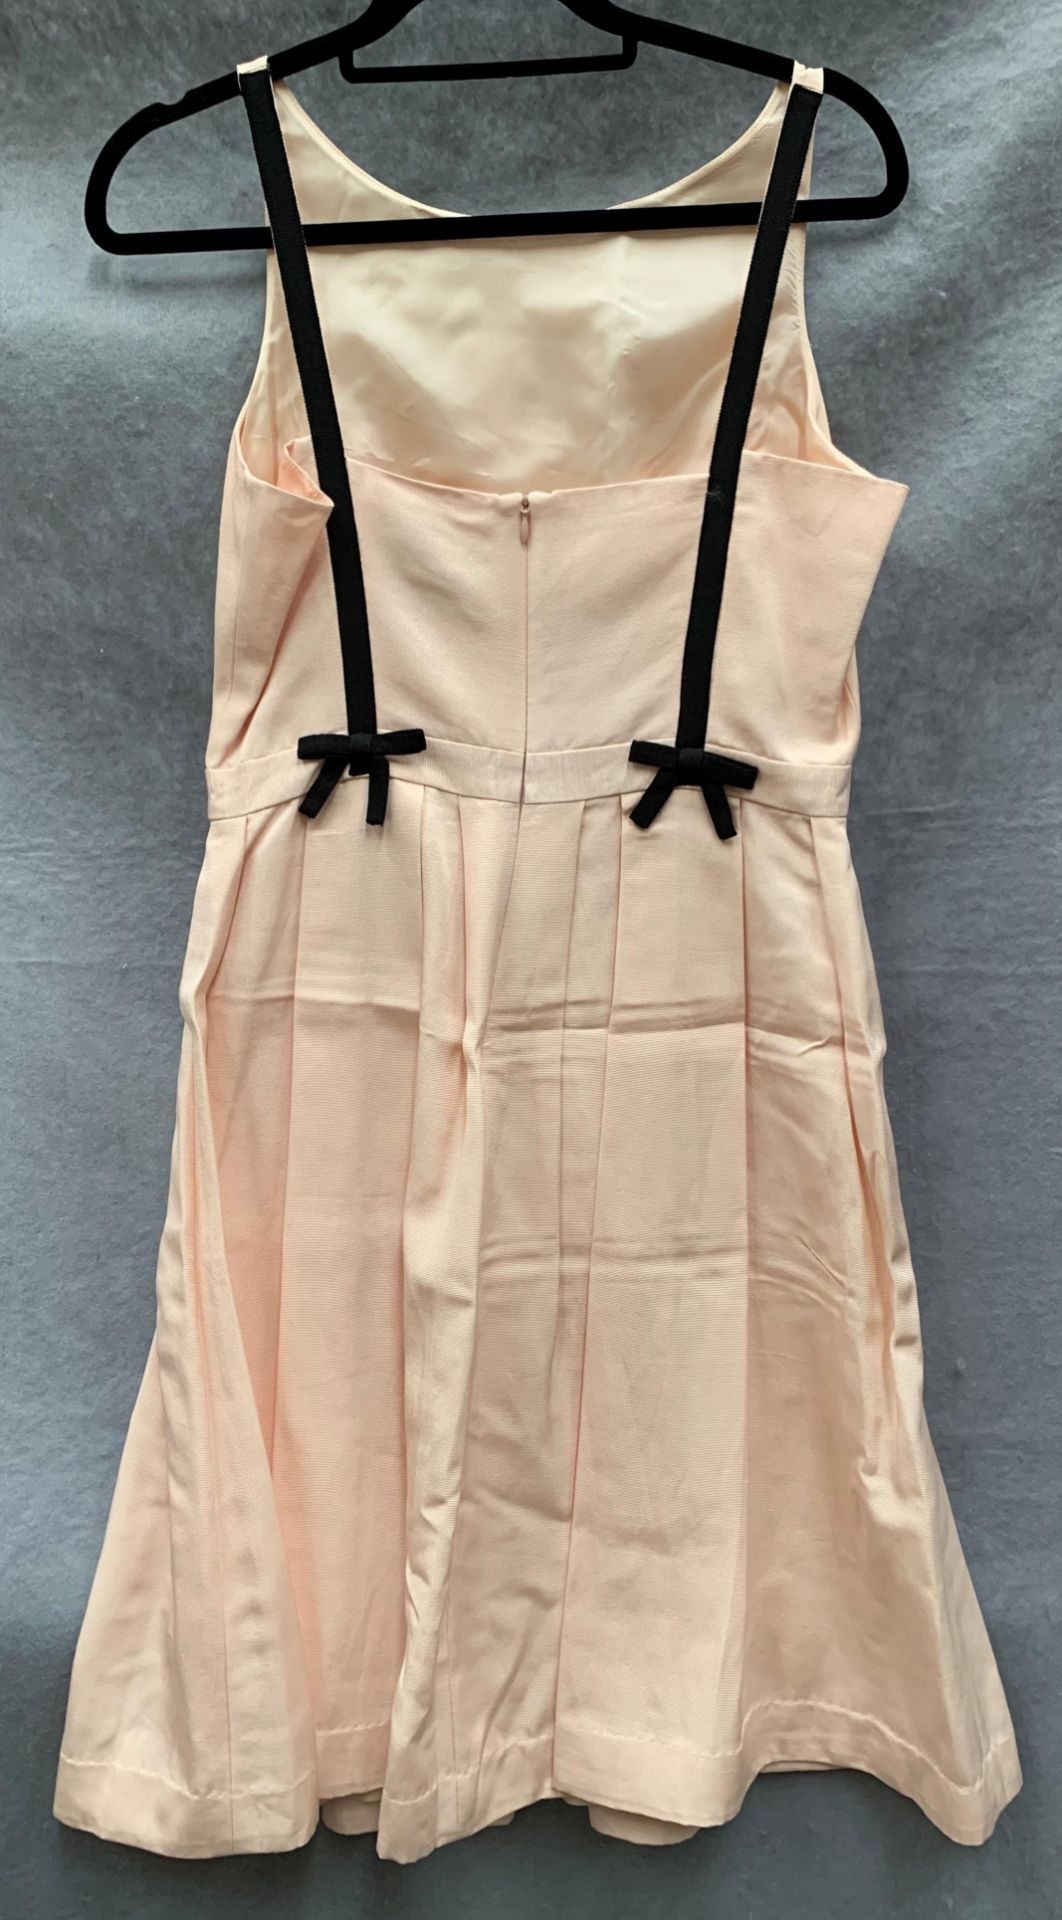 A Havren ladies dress, pink, size 12, - Image 2 of 3